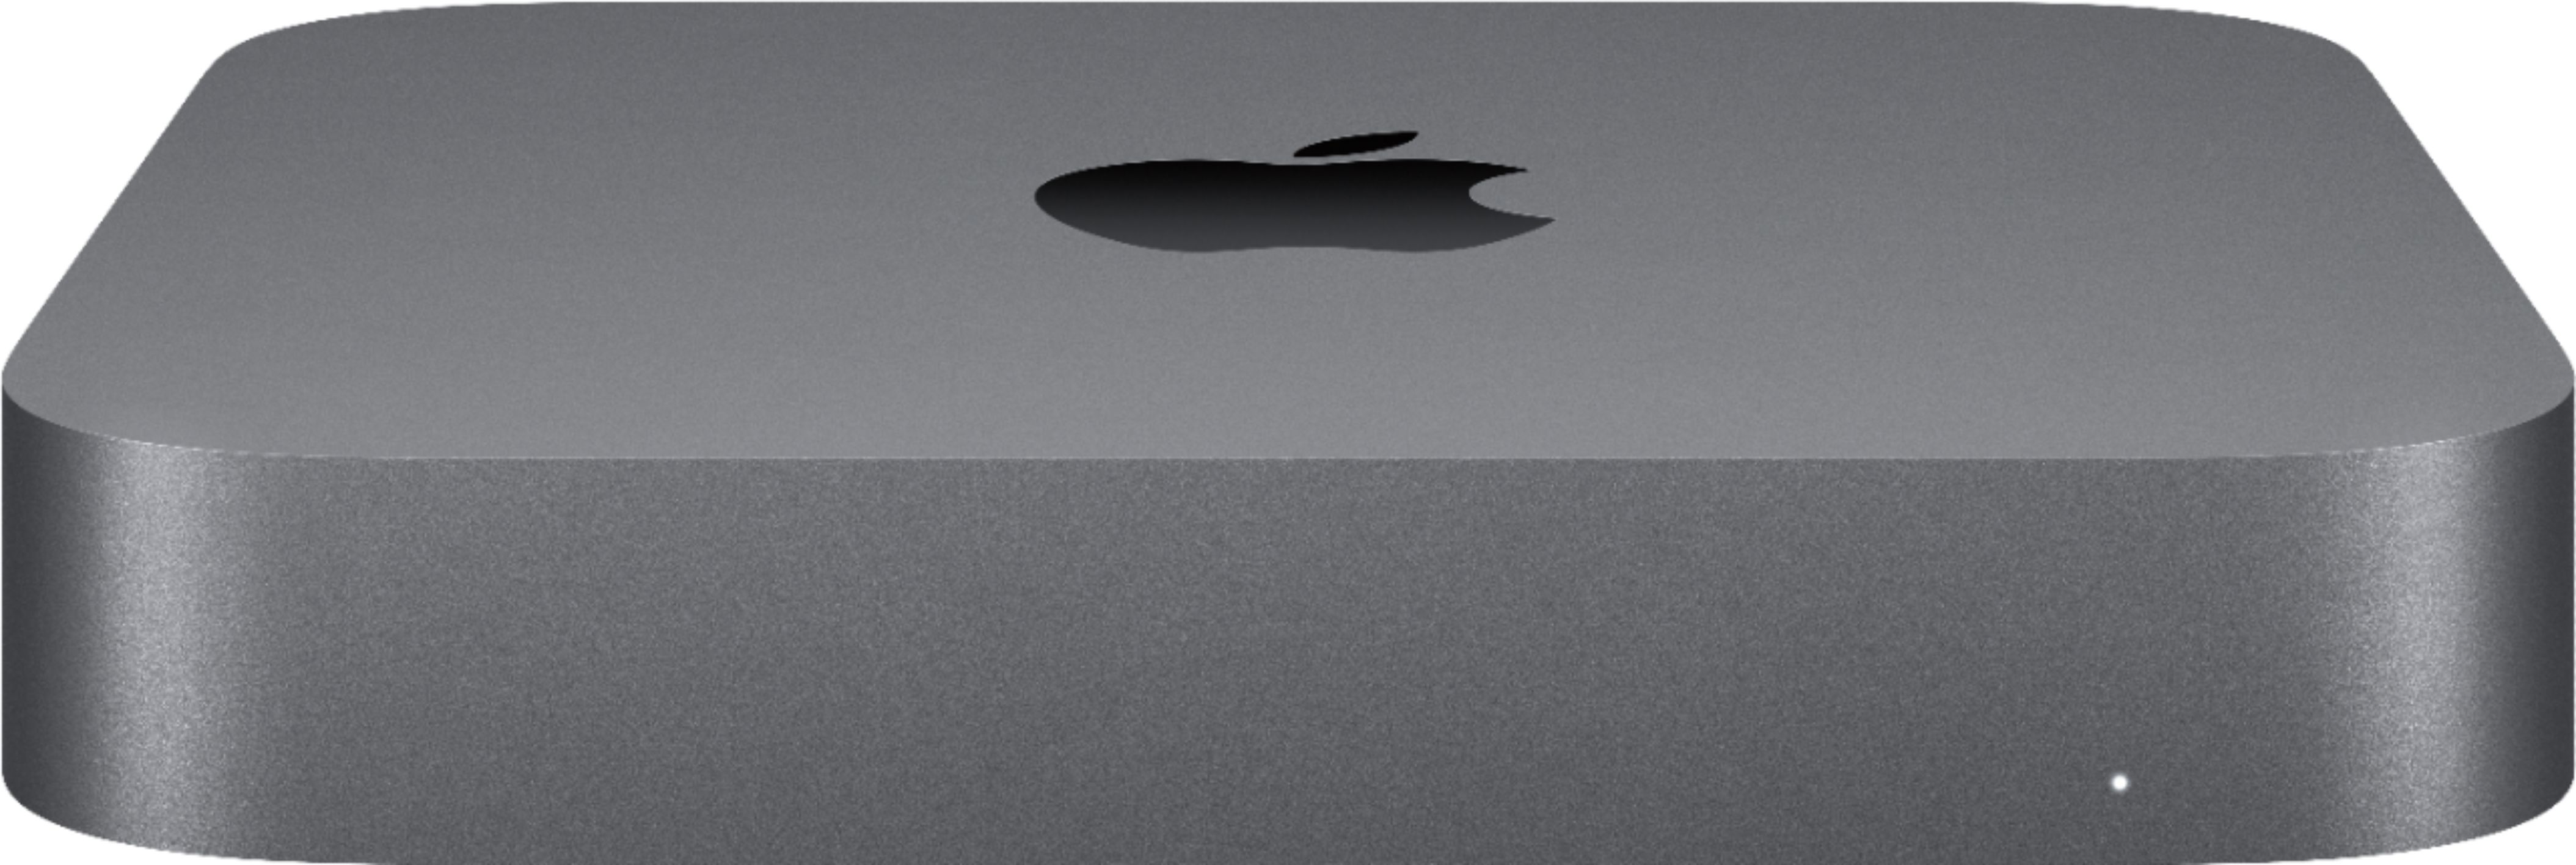 Angle View: Apple - Mac mini - Intel Core i5 - 8GB Memory - 256GB Solid-State Drive - Space Gray